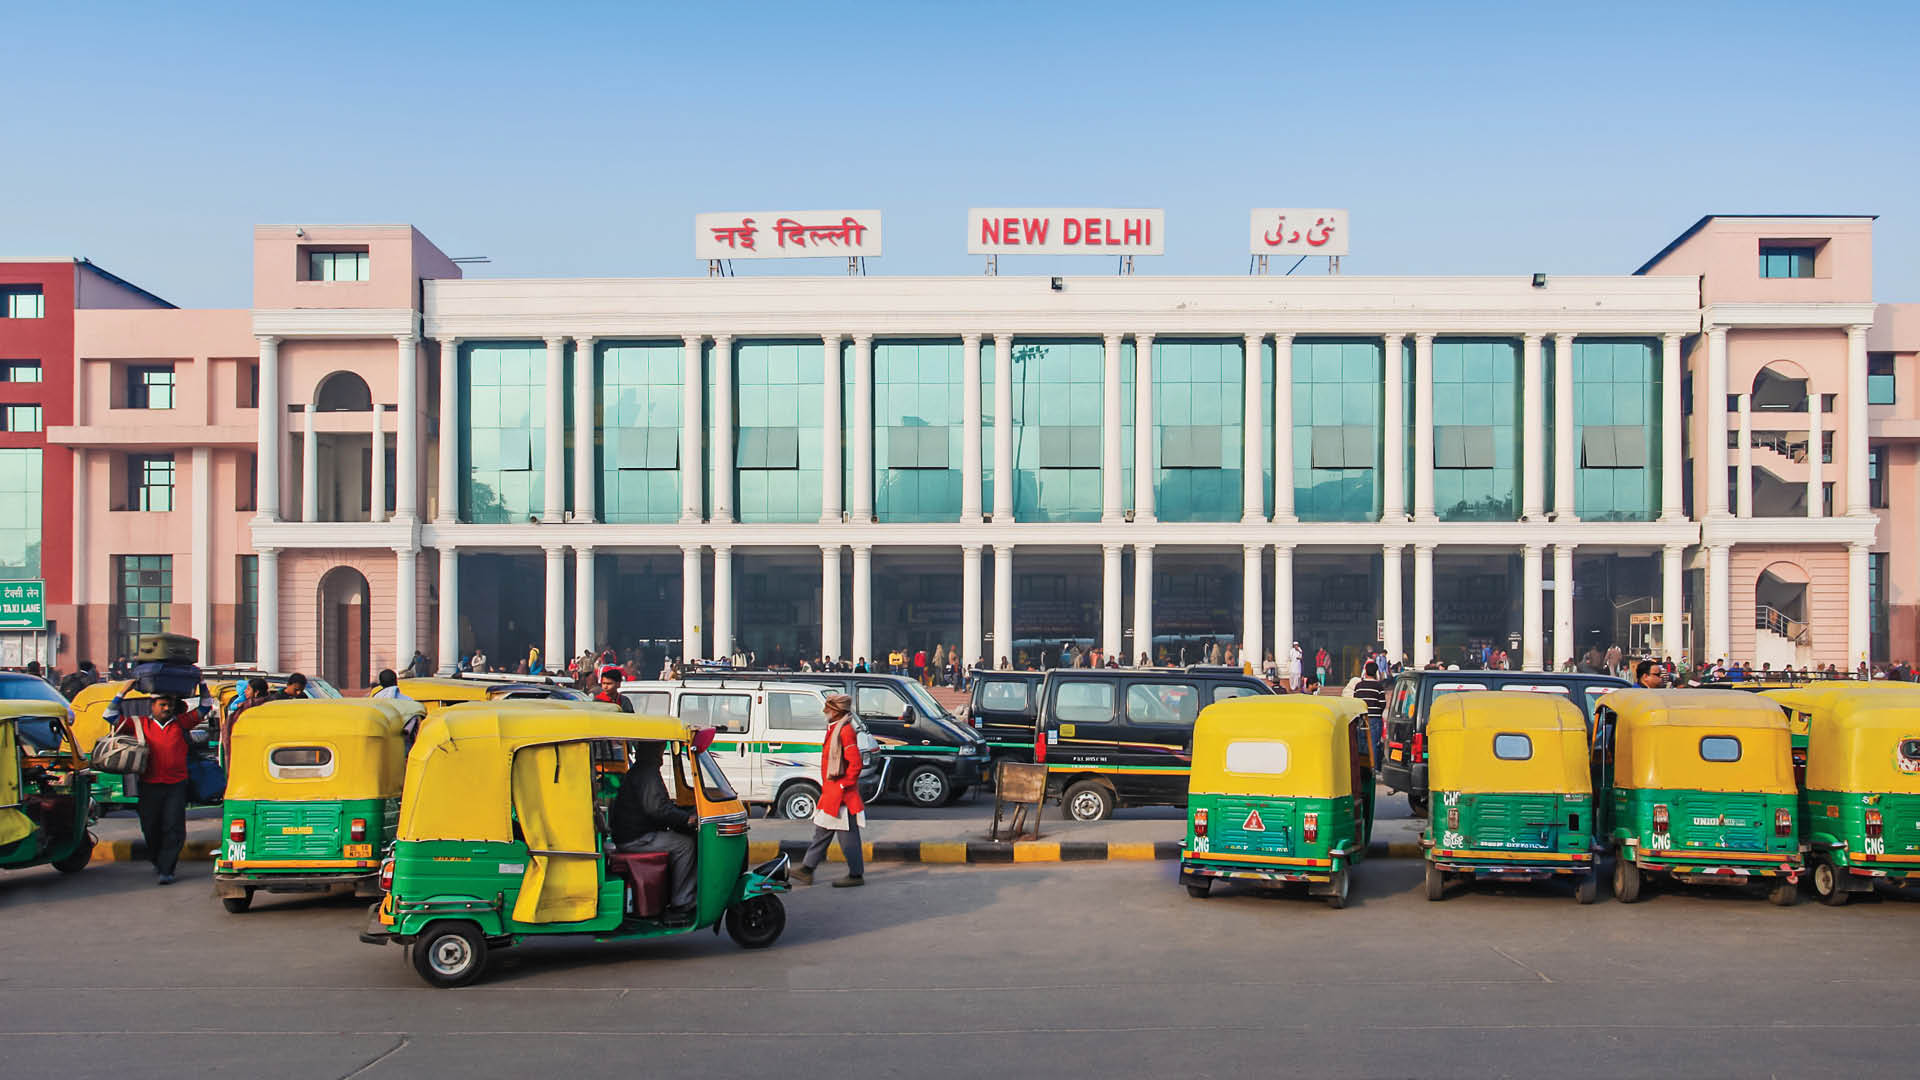 travel agency near new delhi railway station